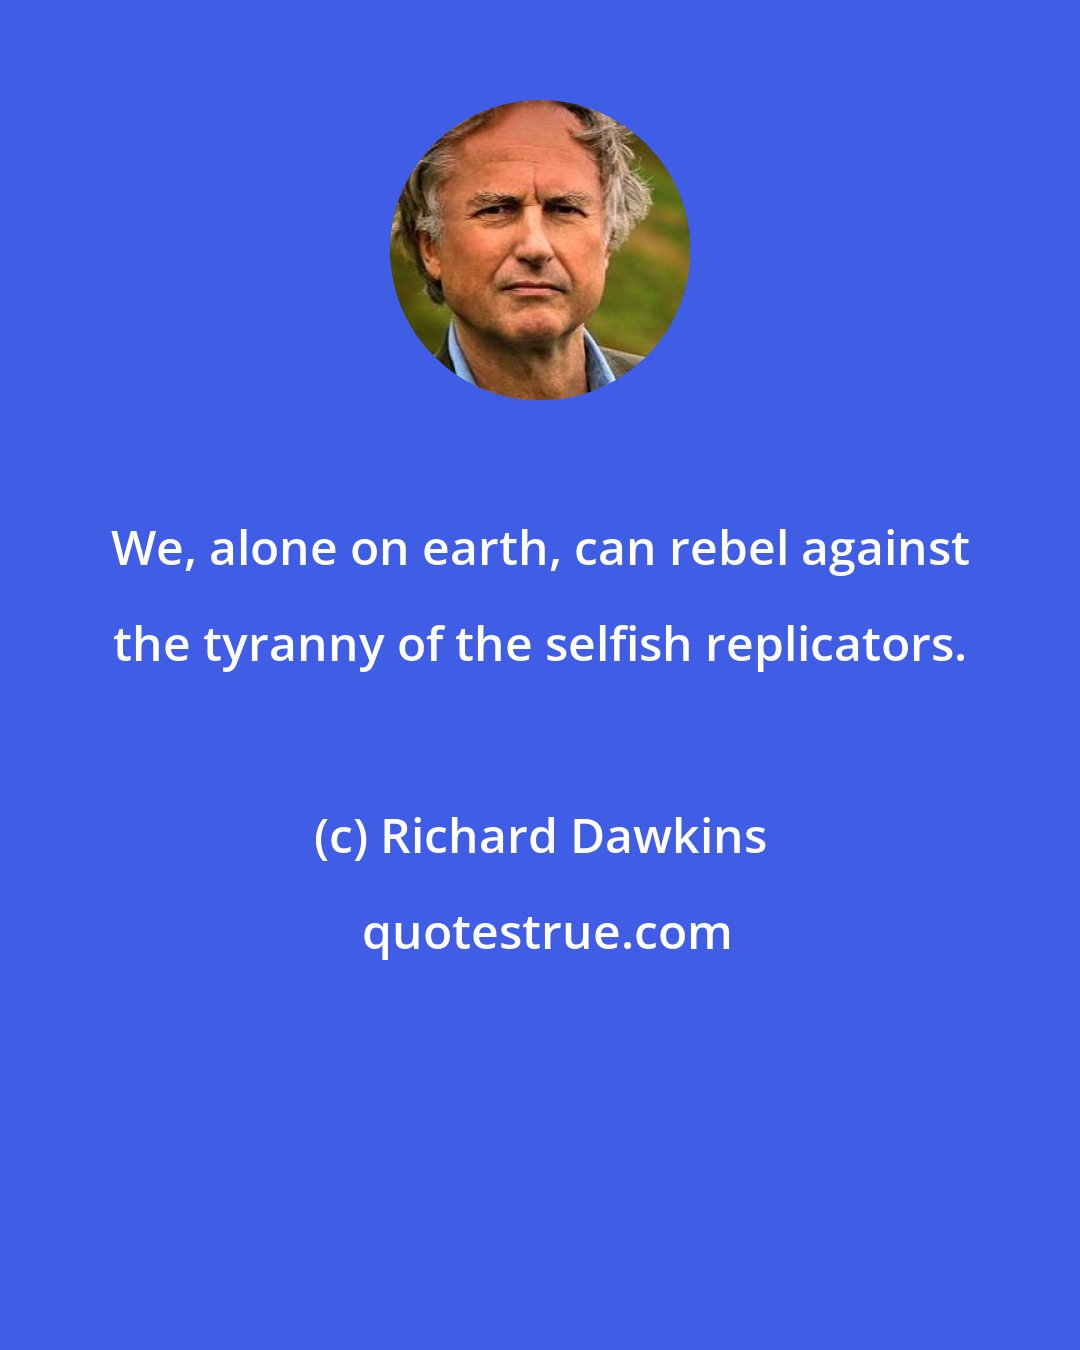 Richard Dawkins: We, alone on earth, can rebel against the tyranny of the selfish replicators.